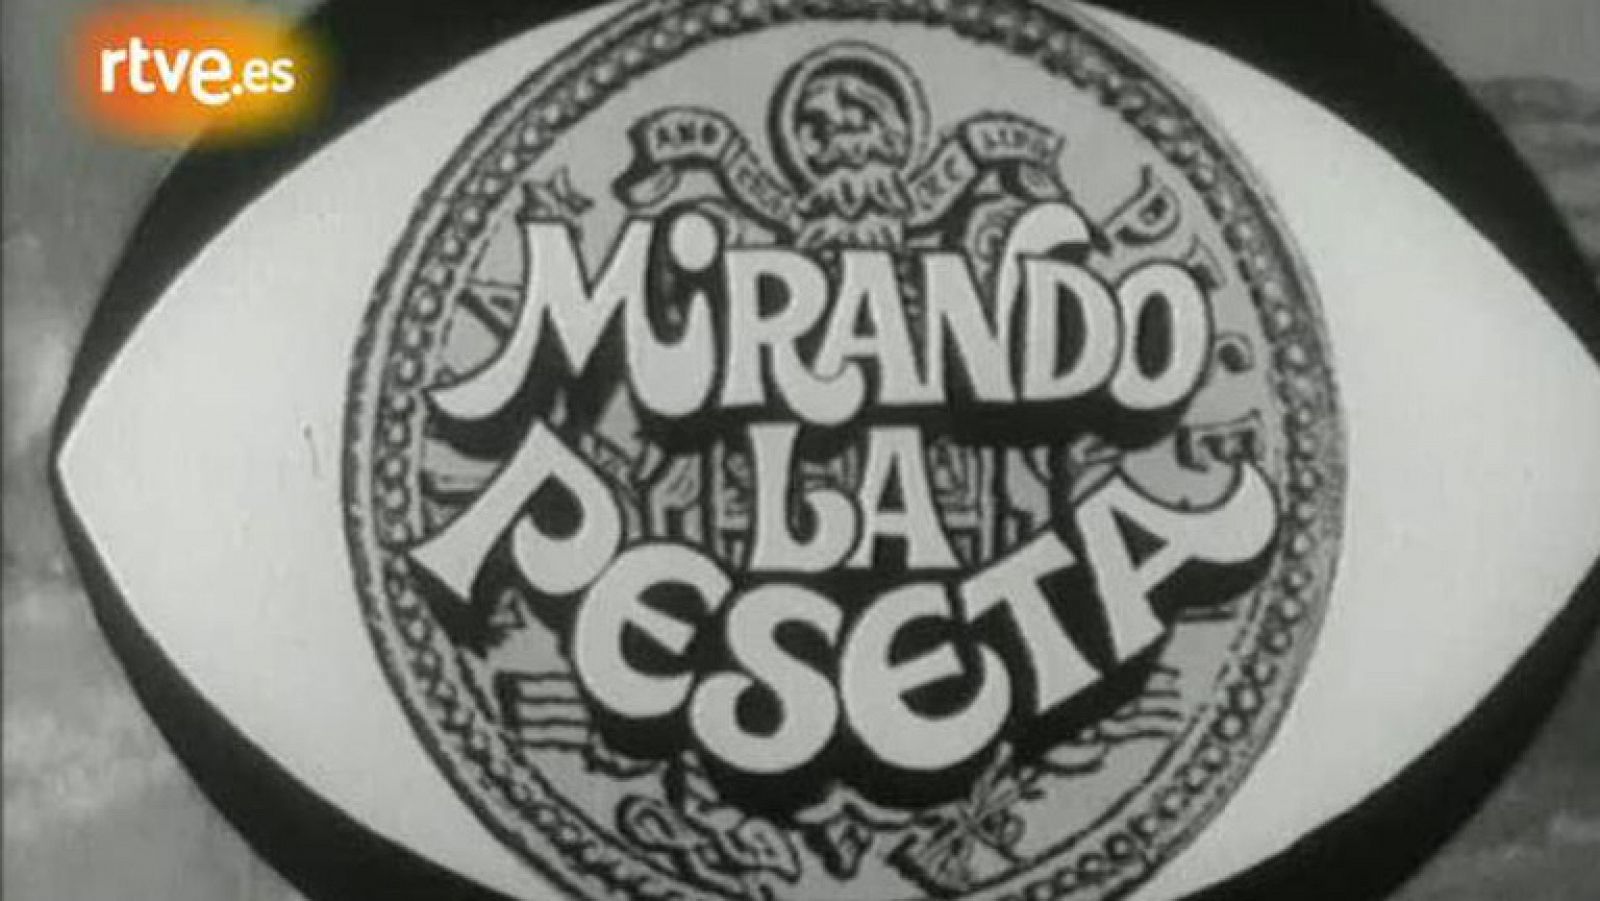 Comienzo de un '35 millones mirando la peseta' (1975)